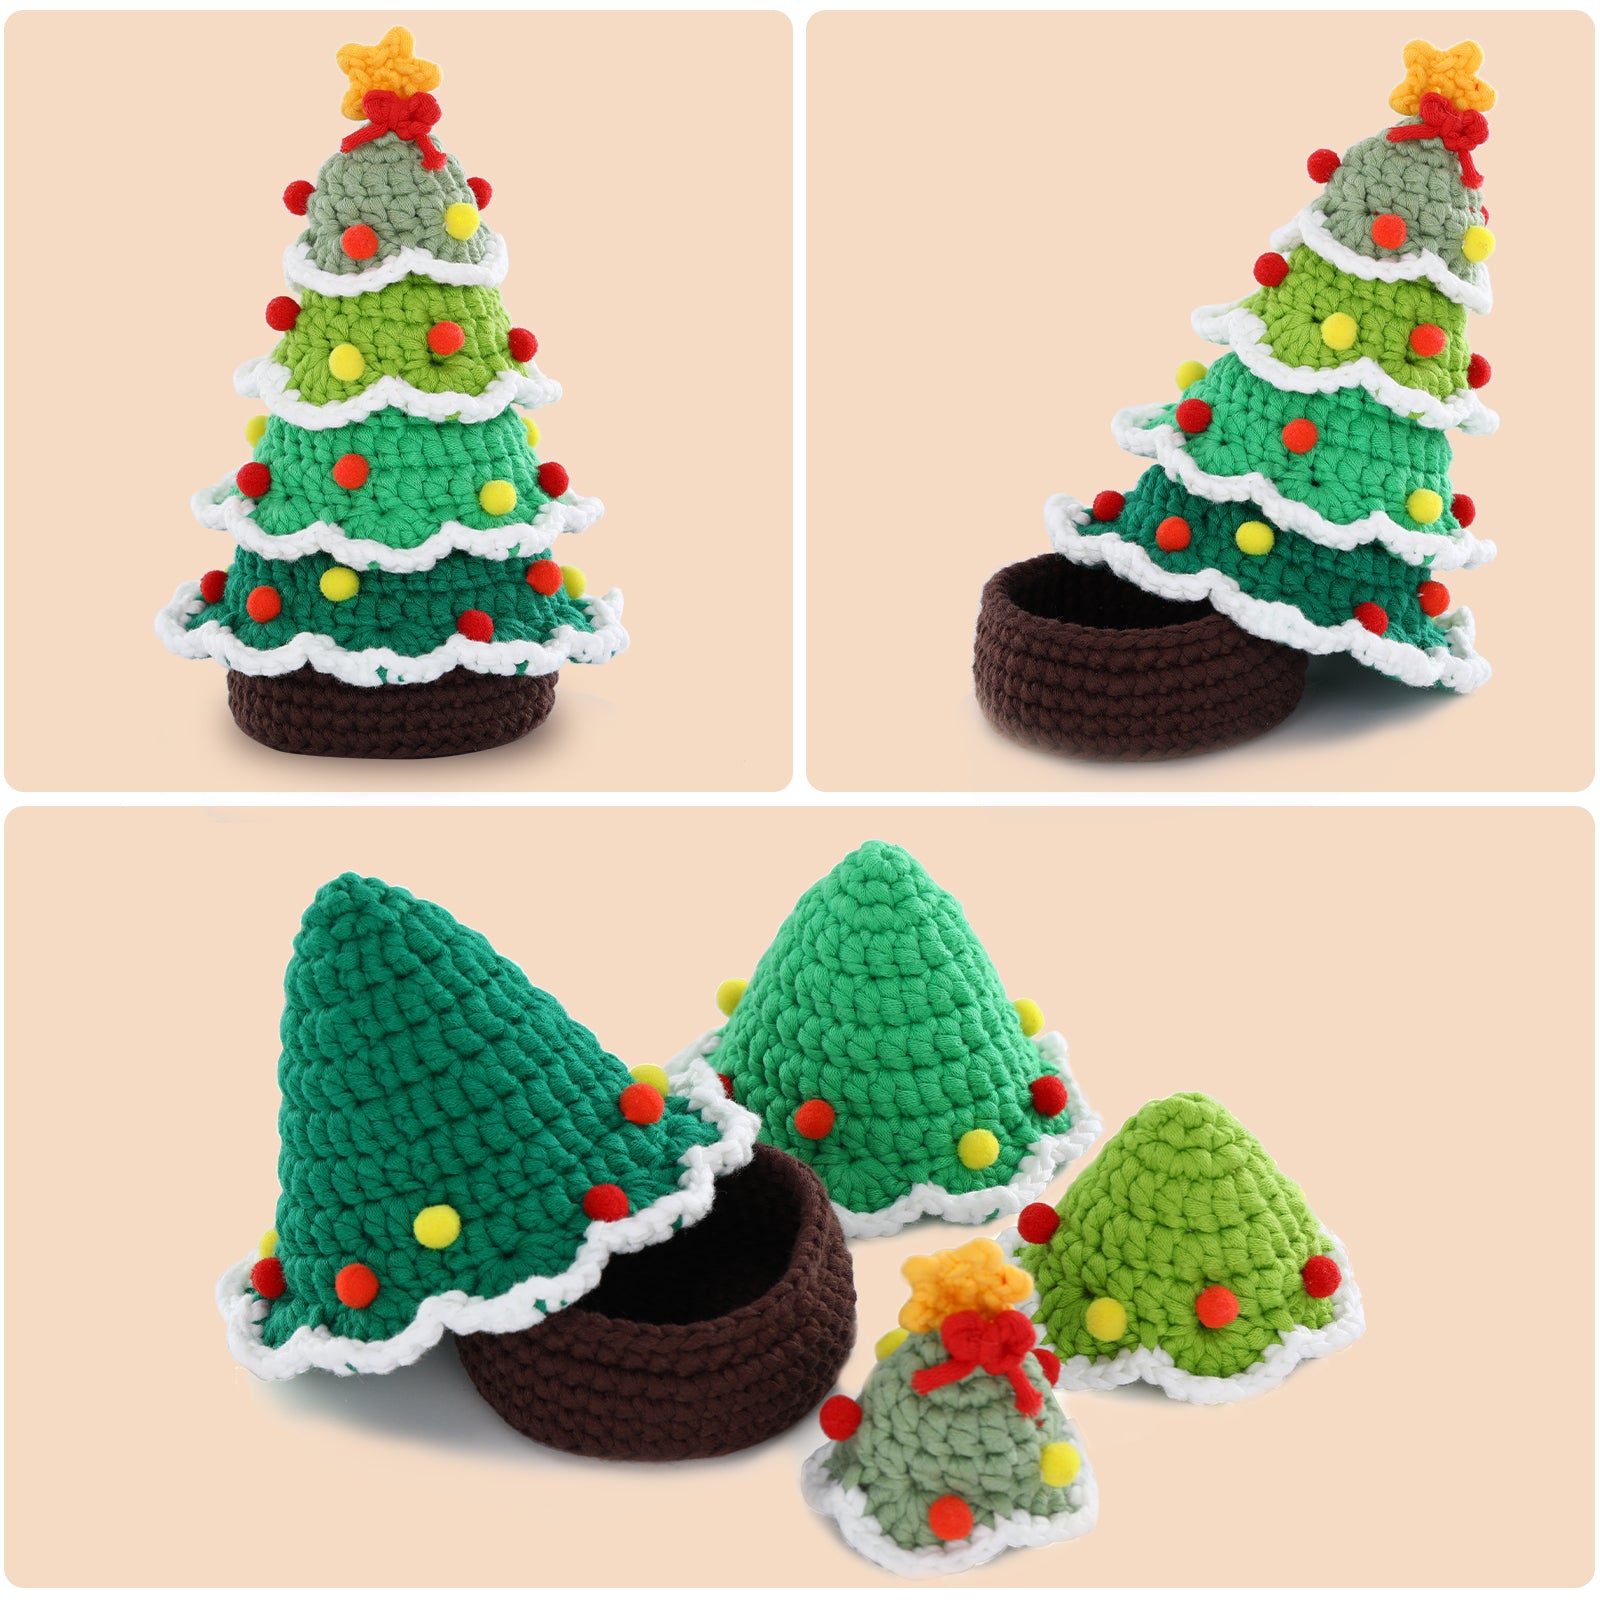 Souarts Green Christmas Tree House Beginners Crochet Kit, Christmas House  Organizer Crochet Kit, Crochet Kit for Adult Beginners with Step-by-Step